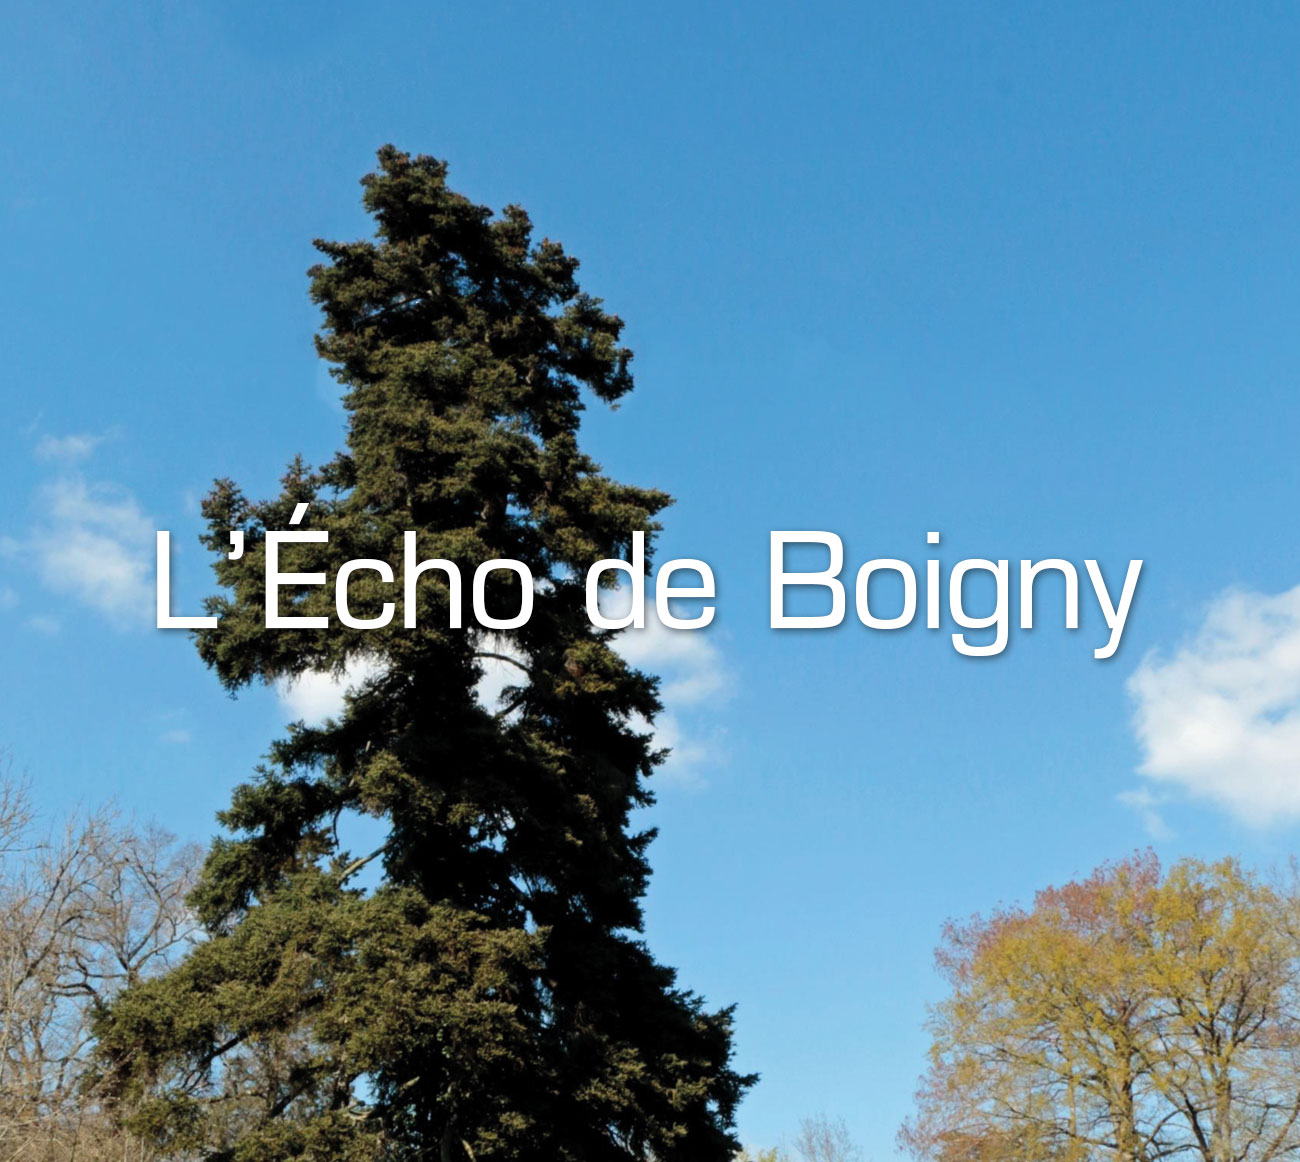 L'Échode Boigny, le bulletin municipal 140